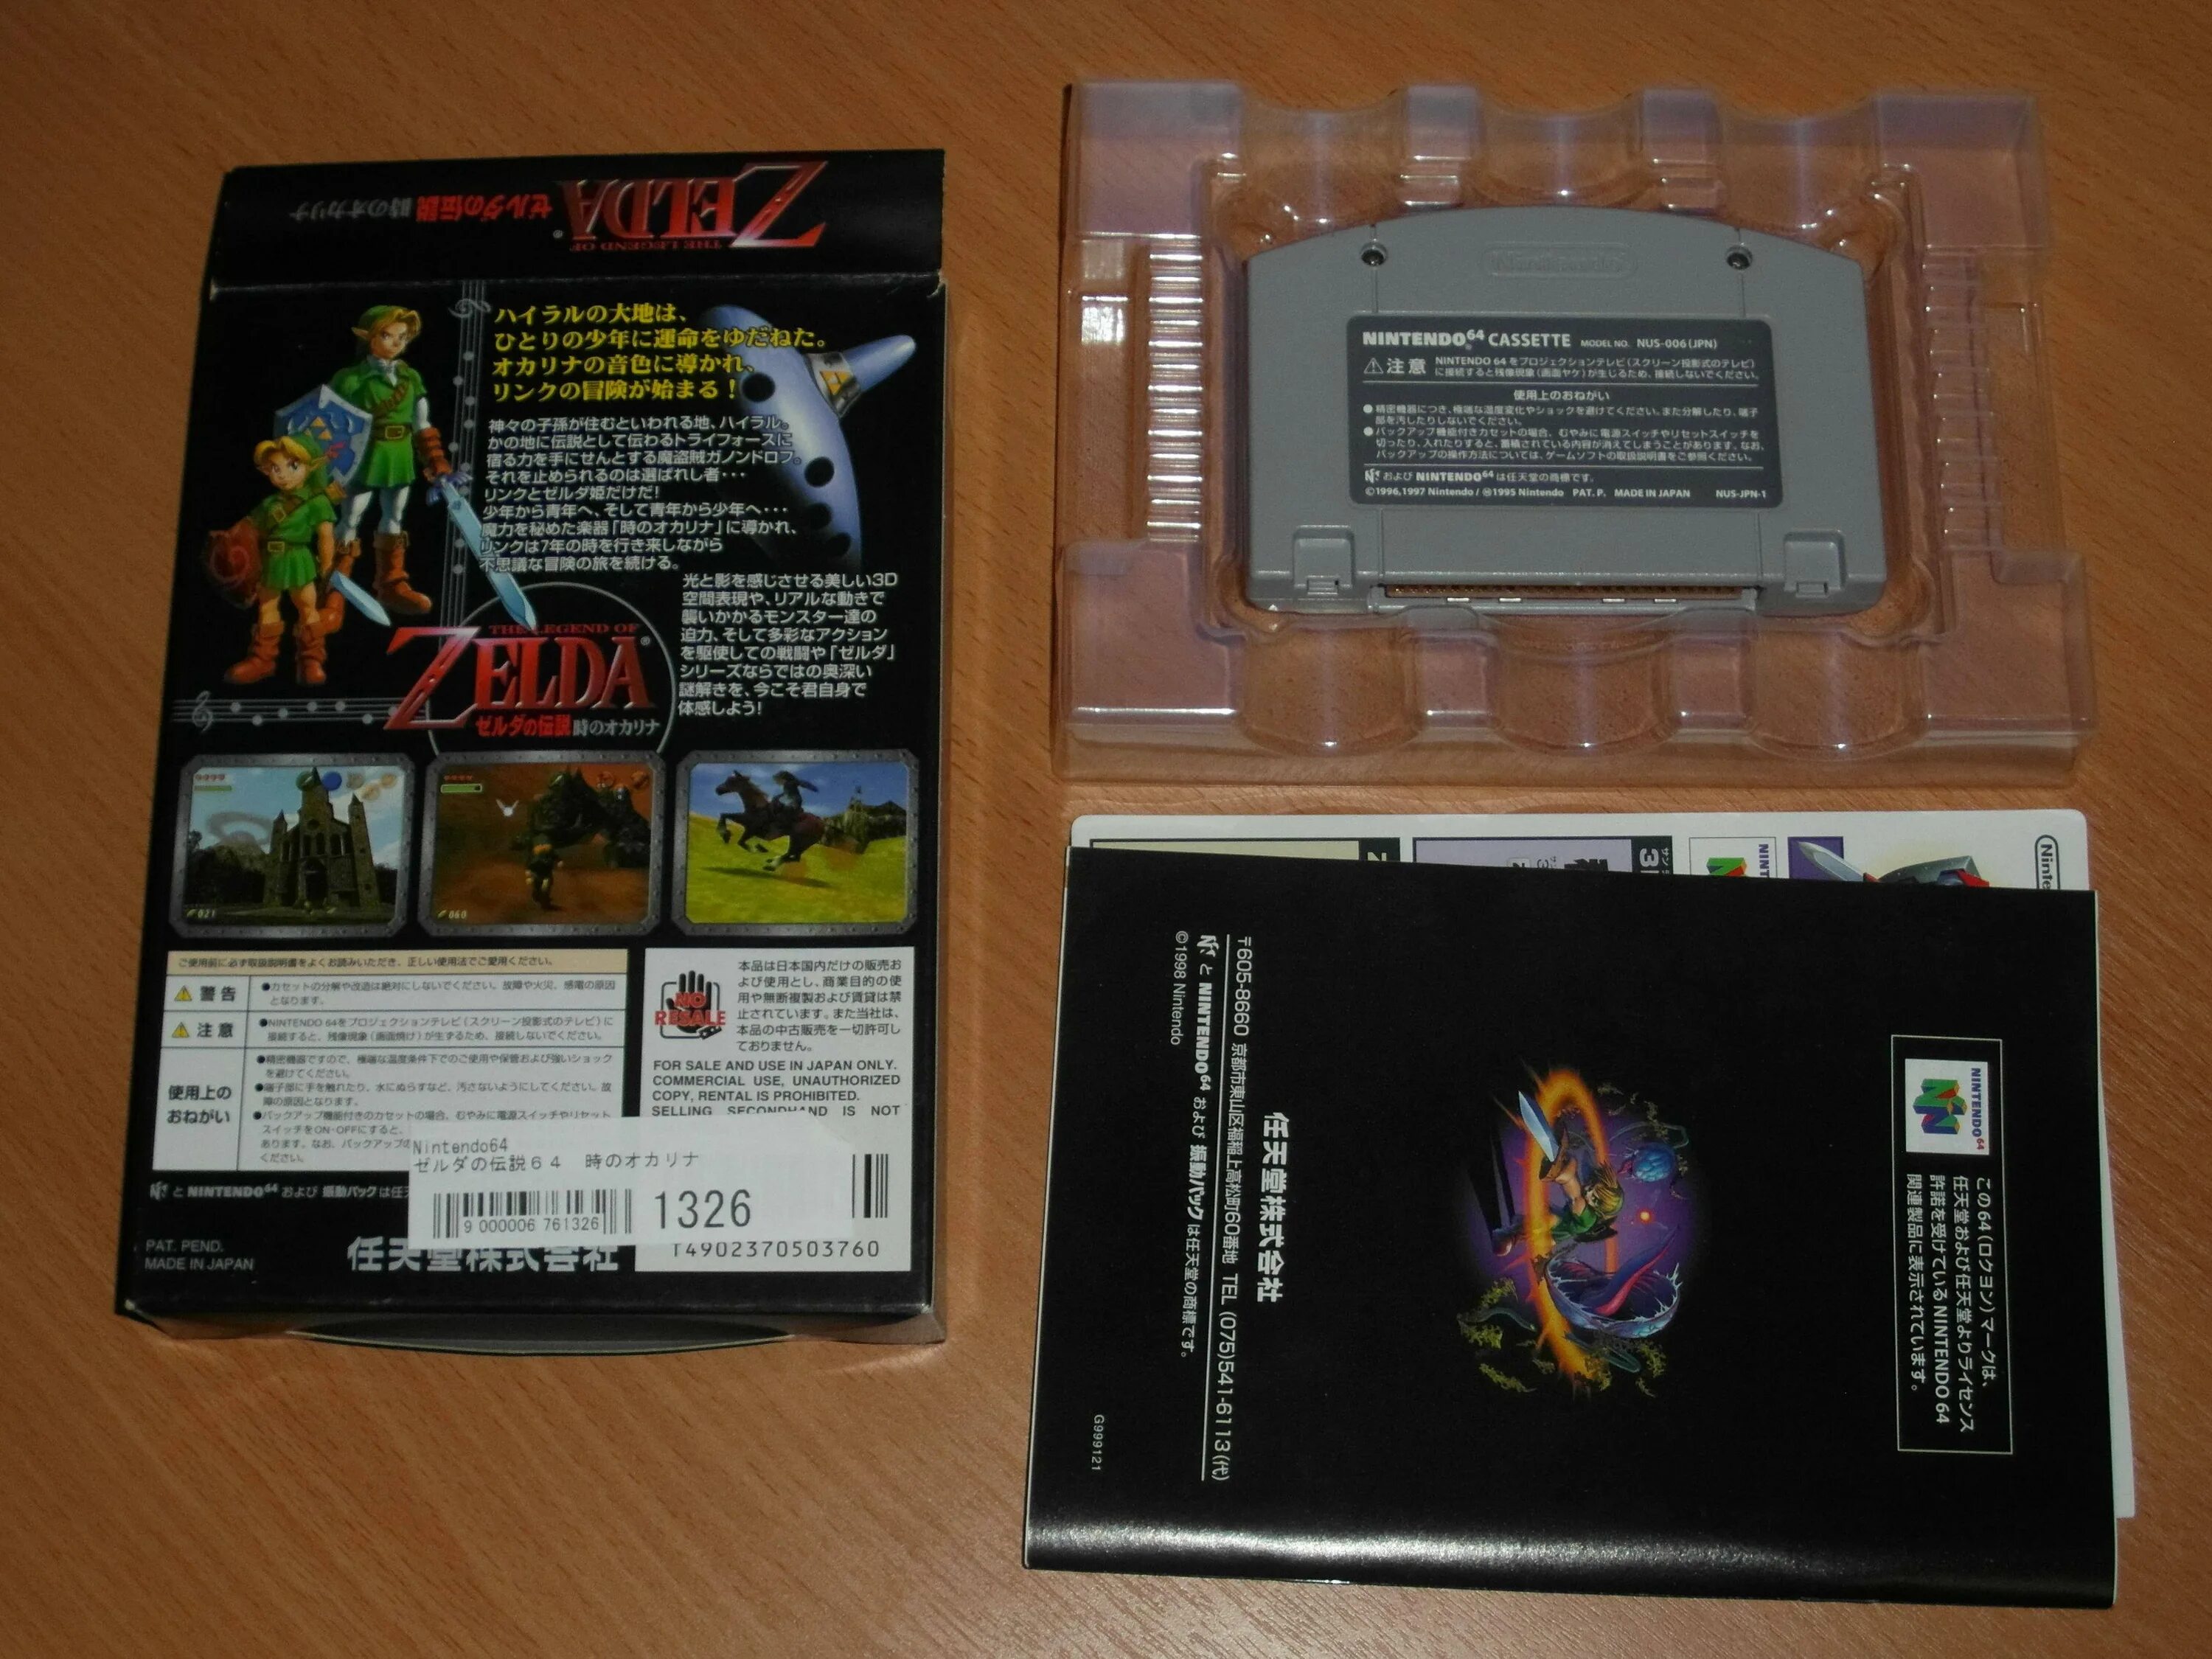 Metroid Famicom Mini GBA. Metroid Famicom картридж. Snes ps2. Нинтендо DS издание Metroid. Nintendo 64 перевод